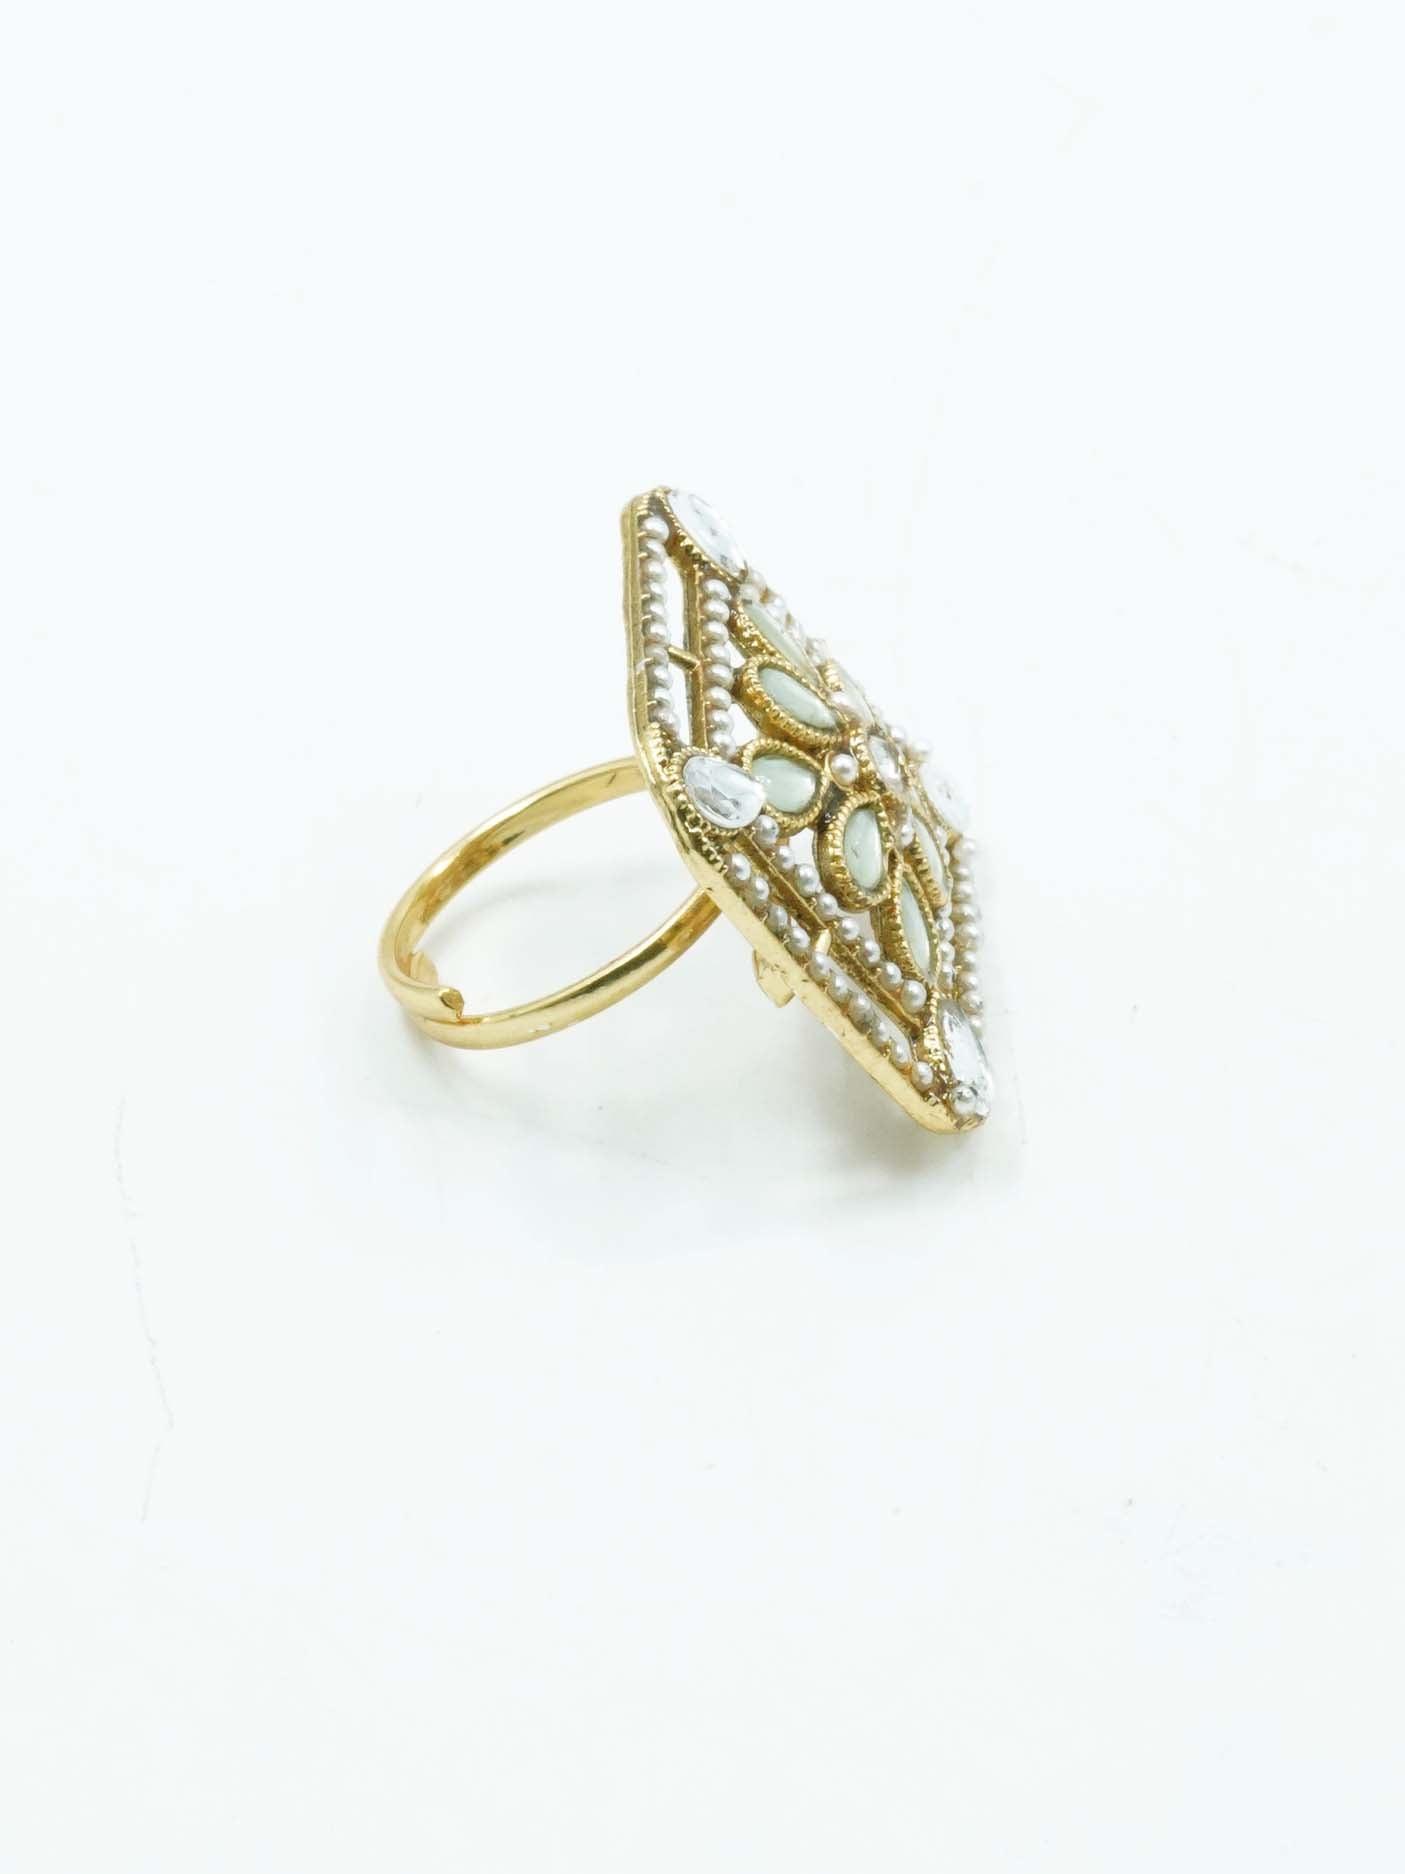 Antique Gold Plated Adjustable Size Designer Finger ring with Stones - Griiham